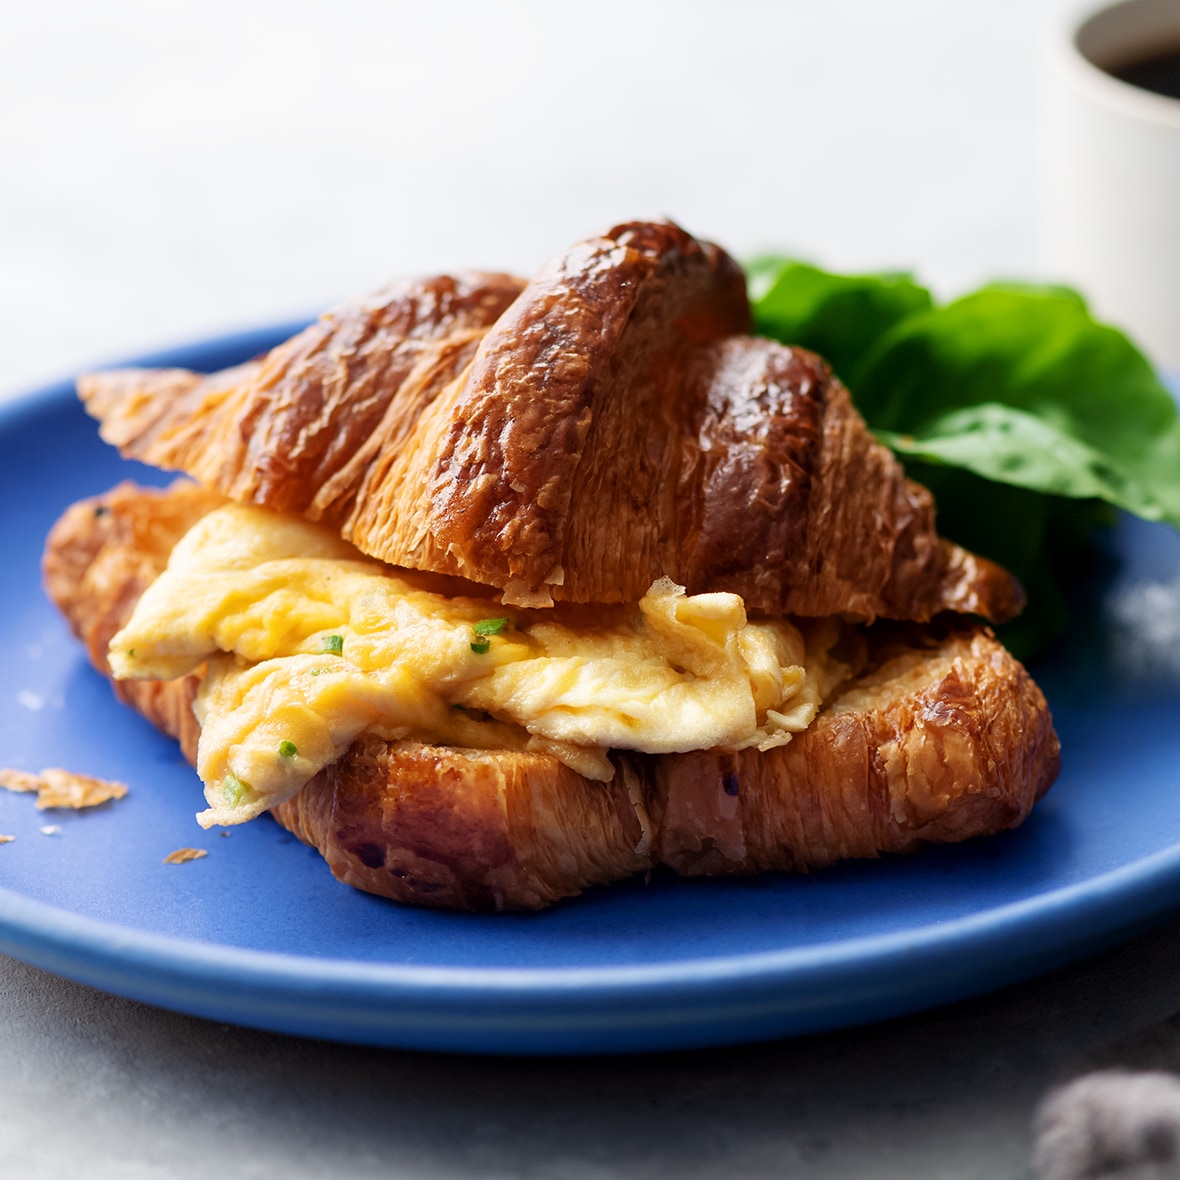 Croissant Sandwich with Egg